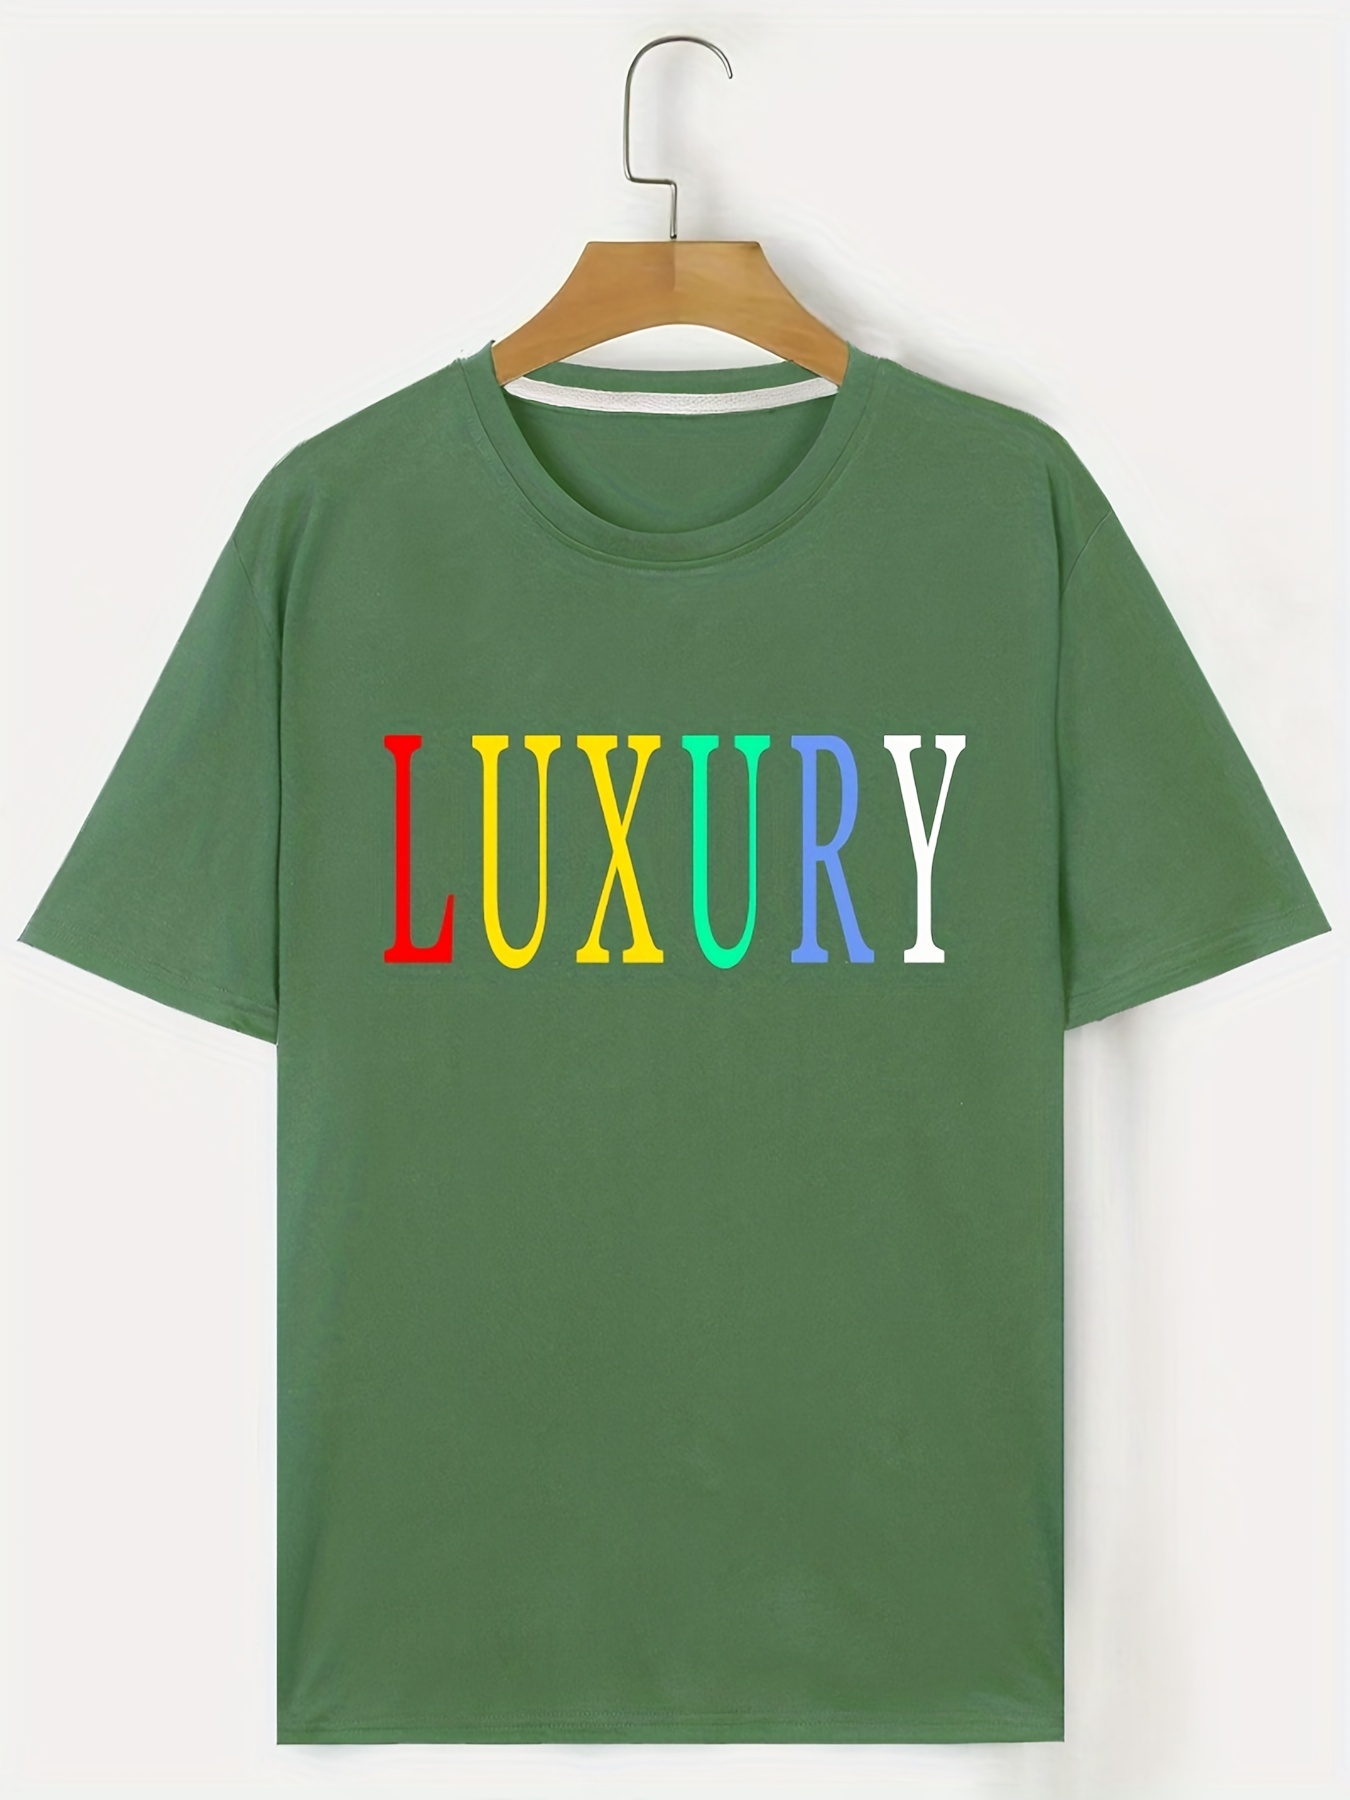 Louis Vuitton Tees - Short Sleeve Shirts for Men - Poshmark